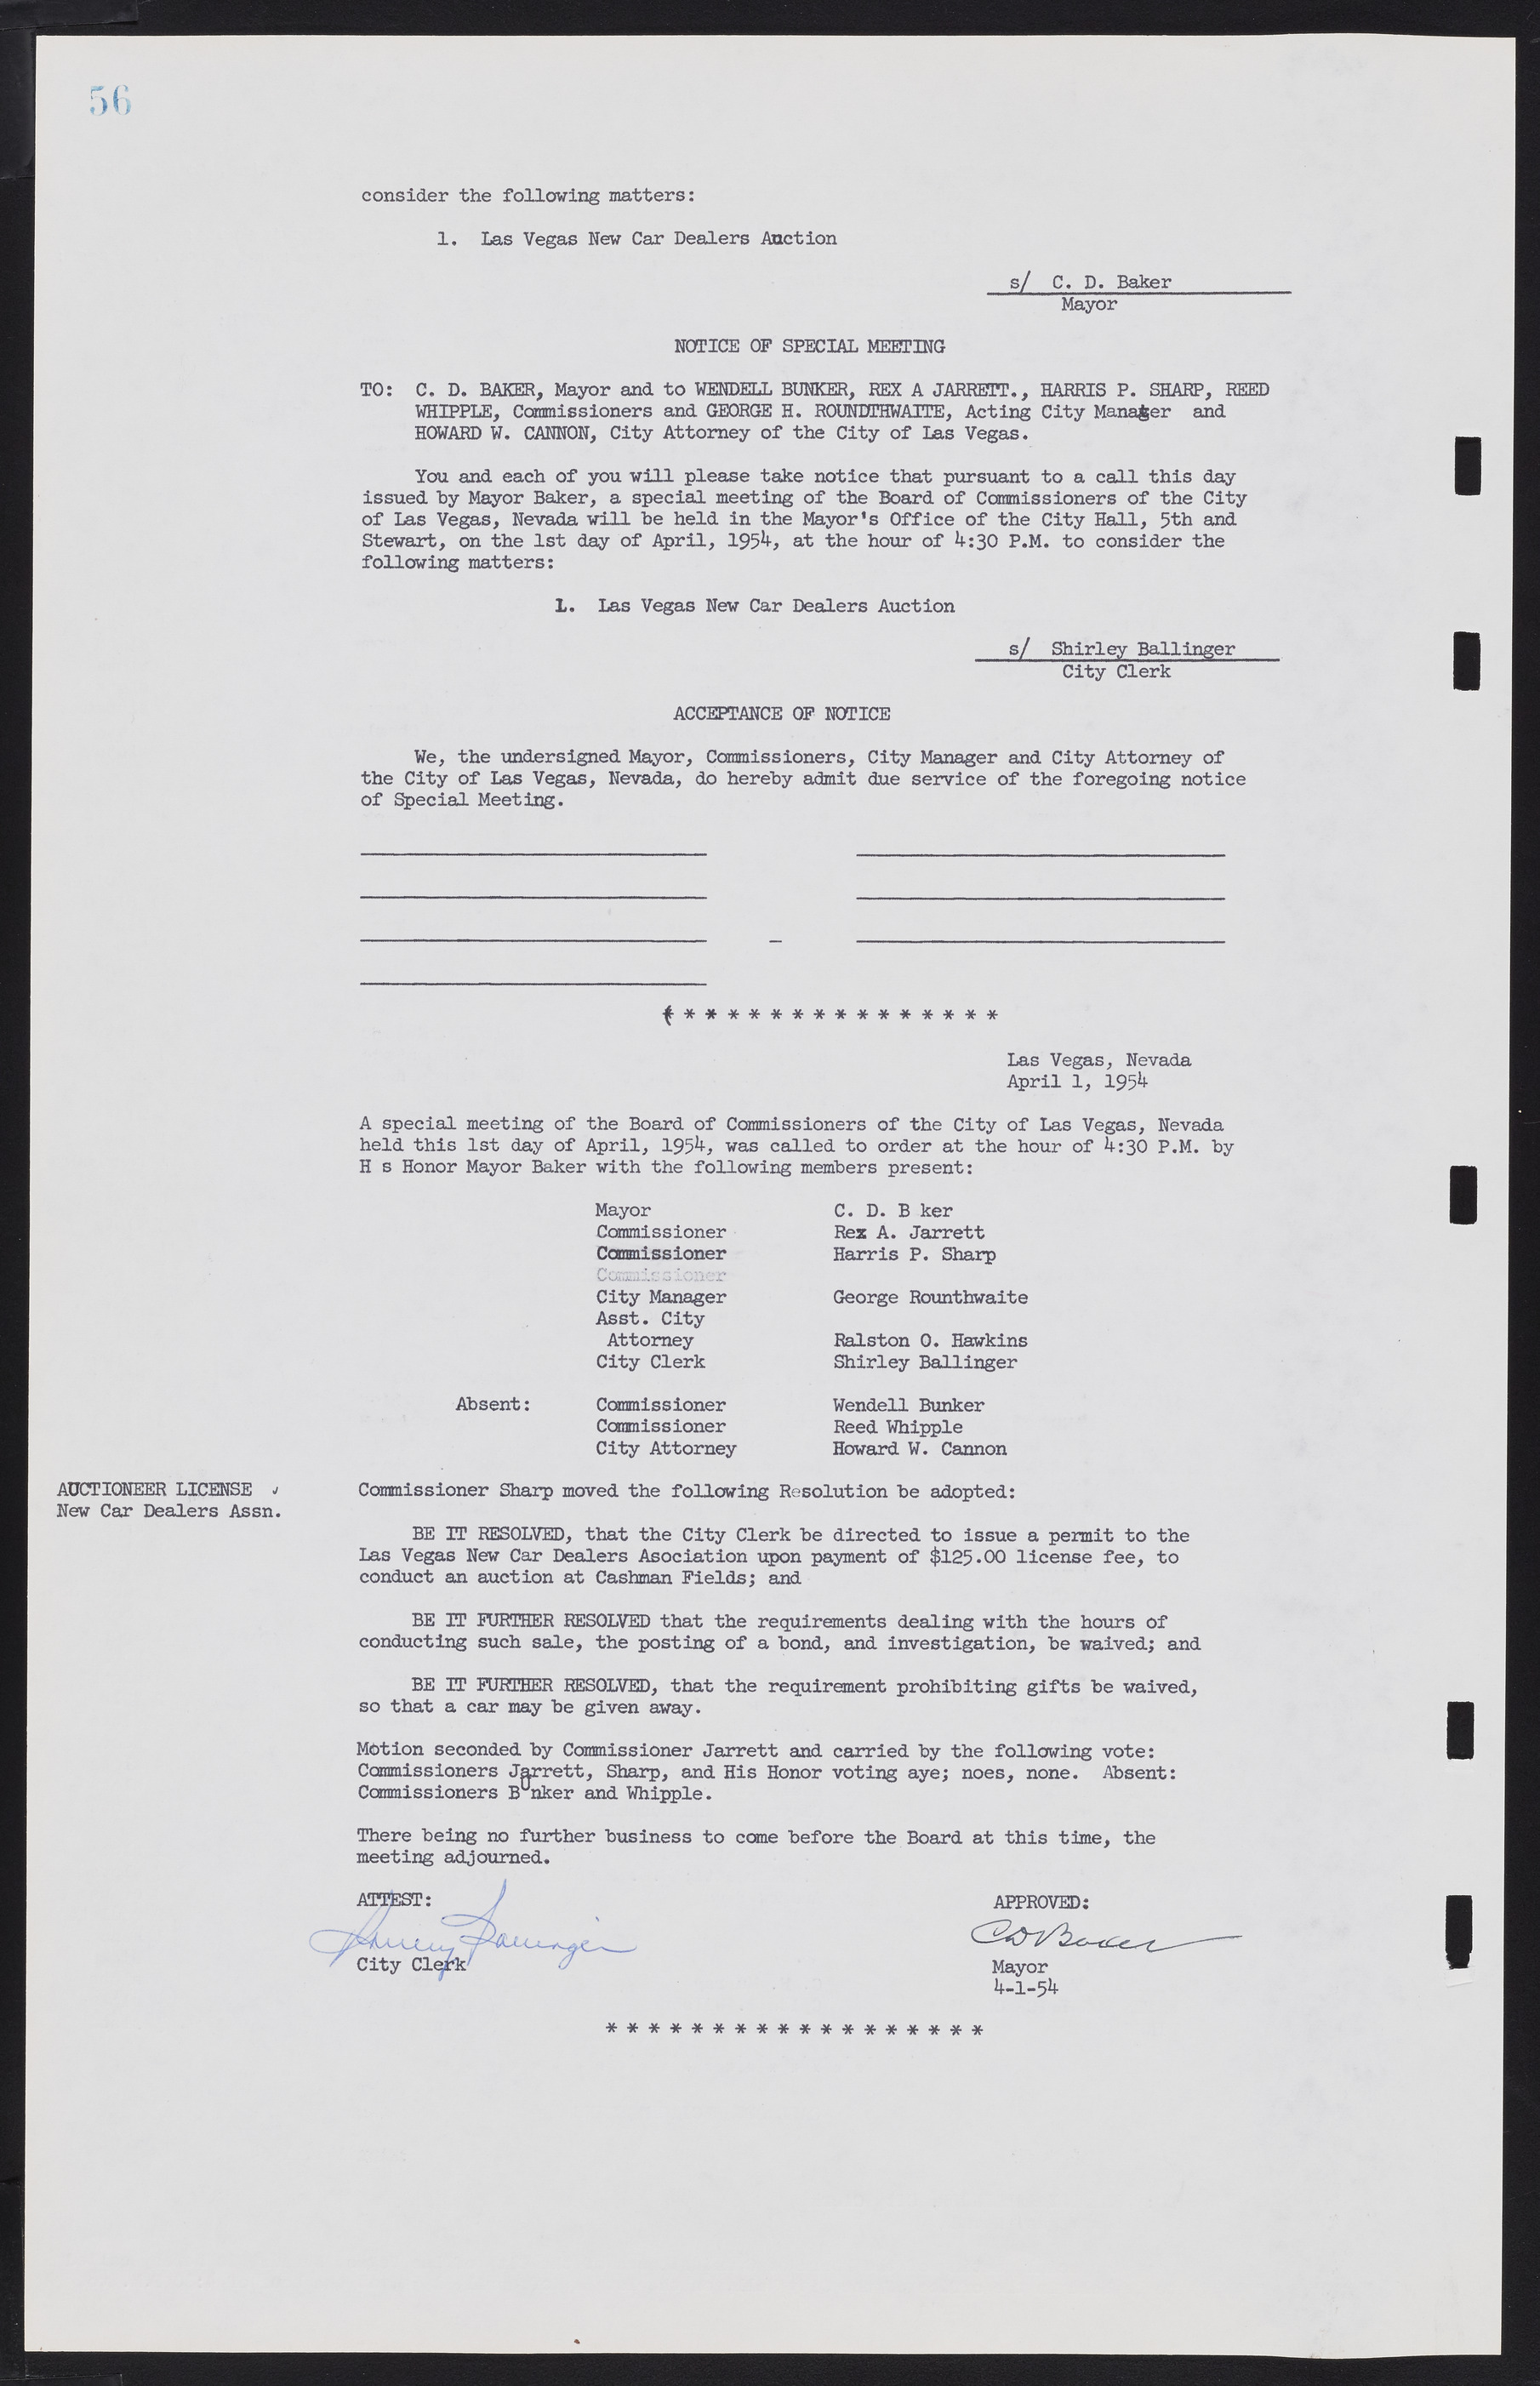 Las Vegas City Commission Minutes, February 17, 1954 to September 21, 1955, lvc000009-60